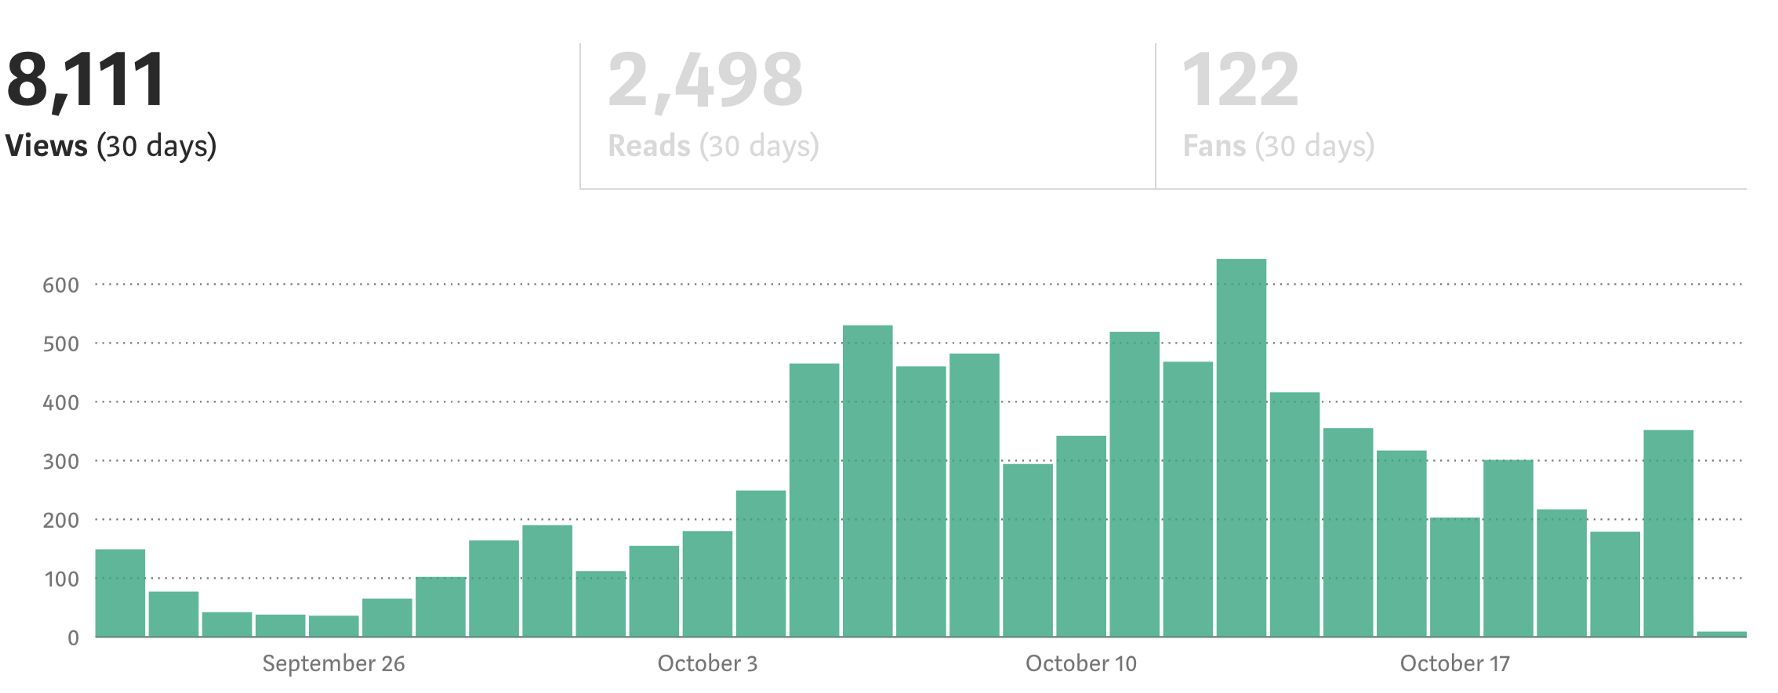 Blog traffic spike